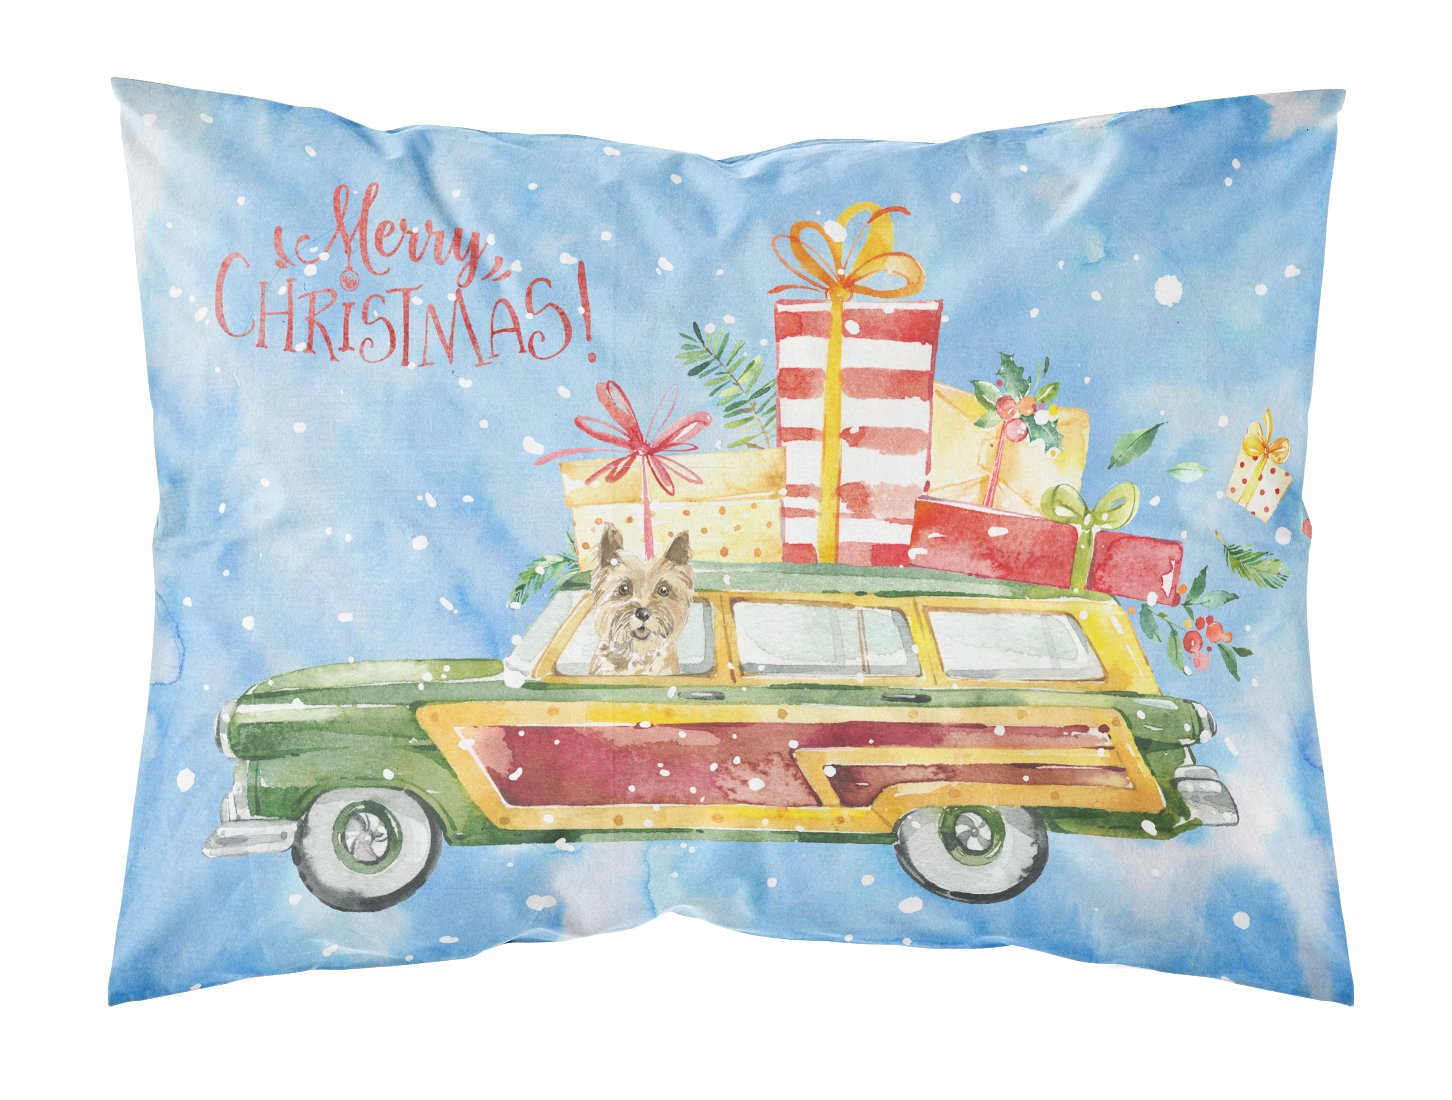 Merry Christmas Cairn Terrier Fabric Standard Pillowcase CK2400PILLOWCASE by Caroline's Treasures